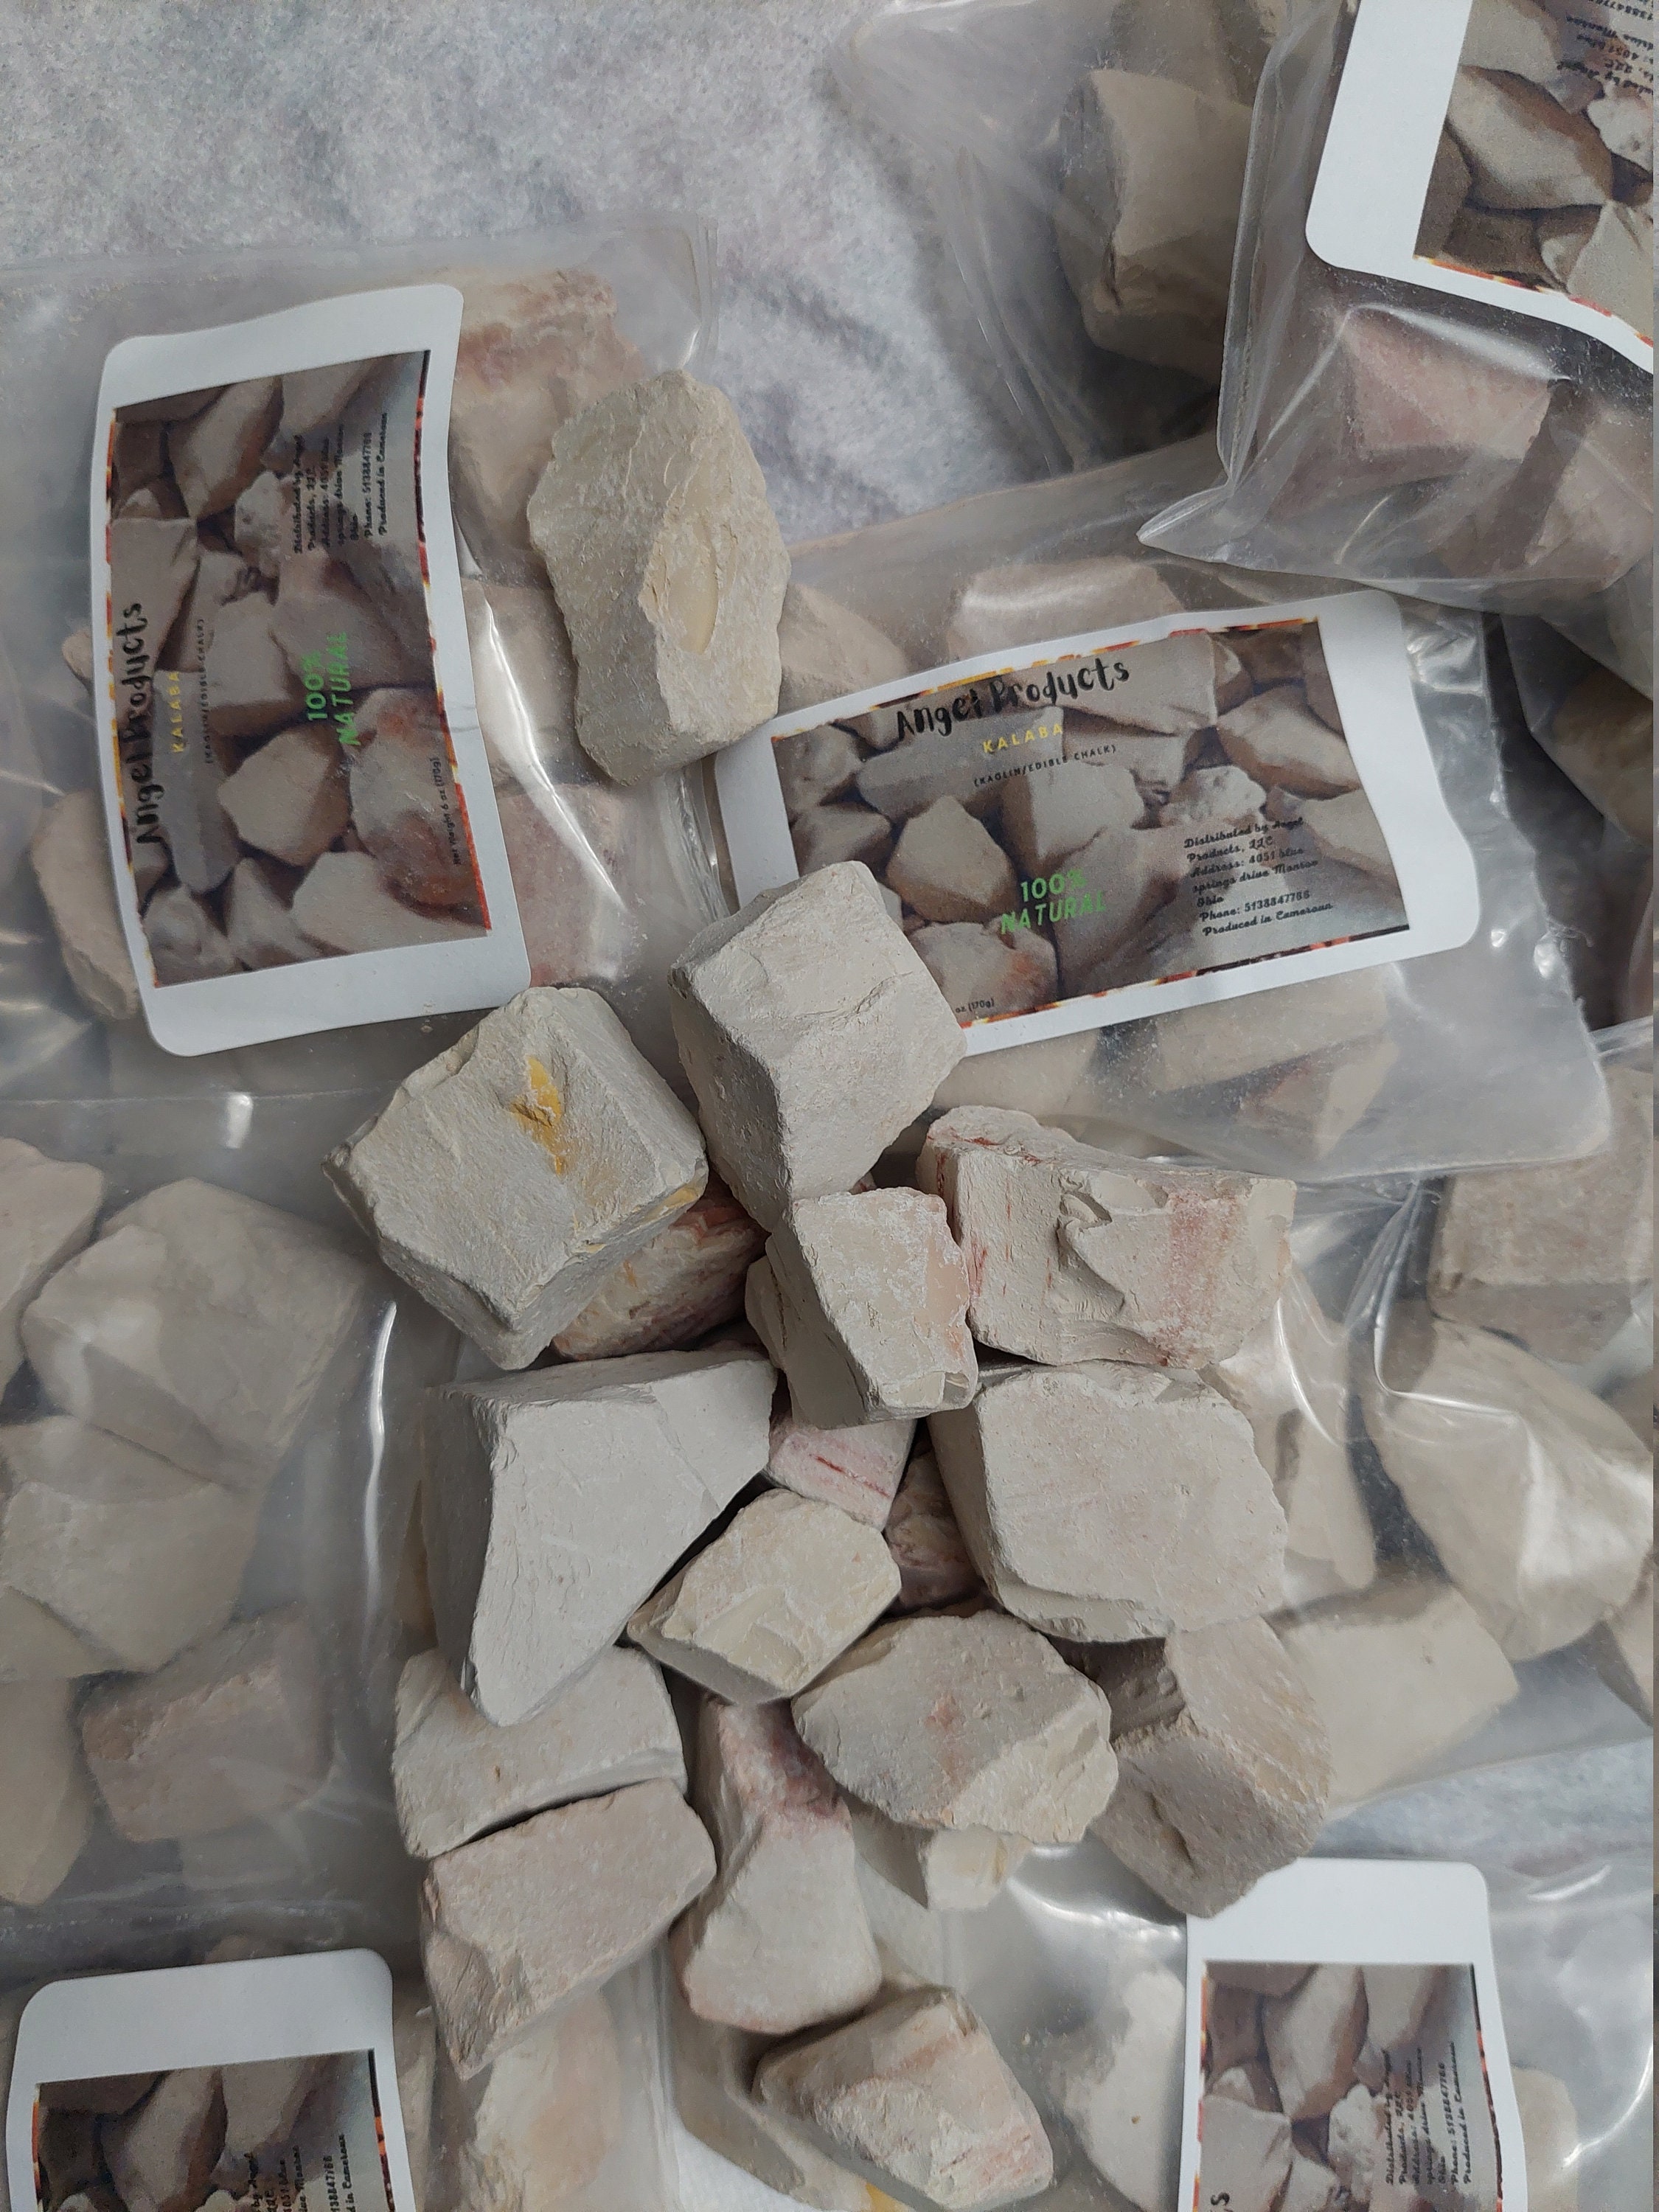 1 kg Kaolin / Argile comestible / Kalaba / Craie de marbre / Craie de  calebasse / Calabar / calaba/ Lokpo / Nzu / Poto / Ulo / Mabele / La Craie  / Argile -  France